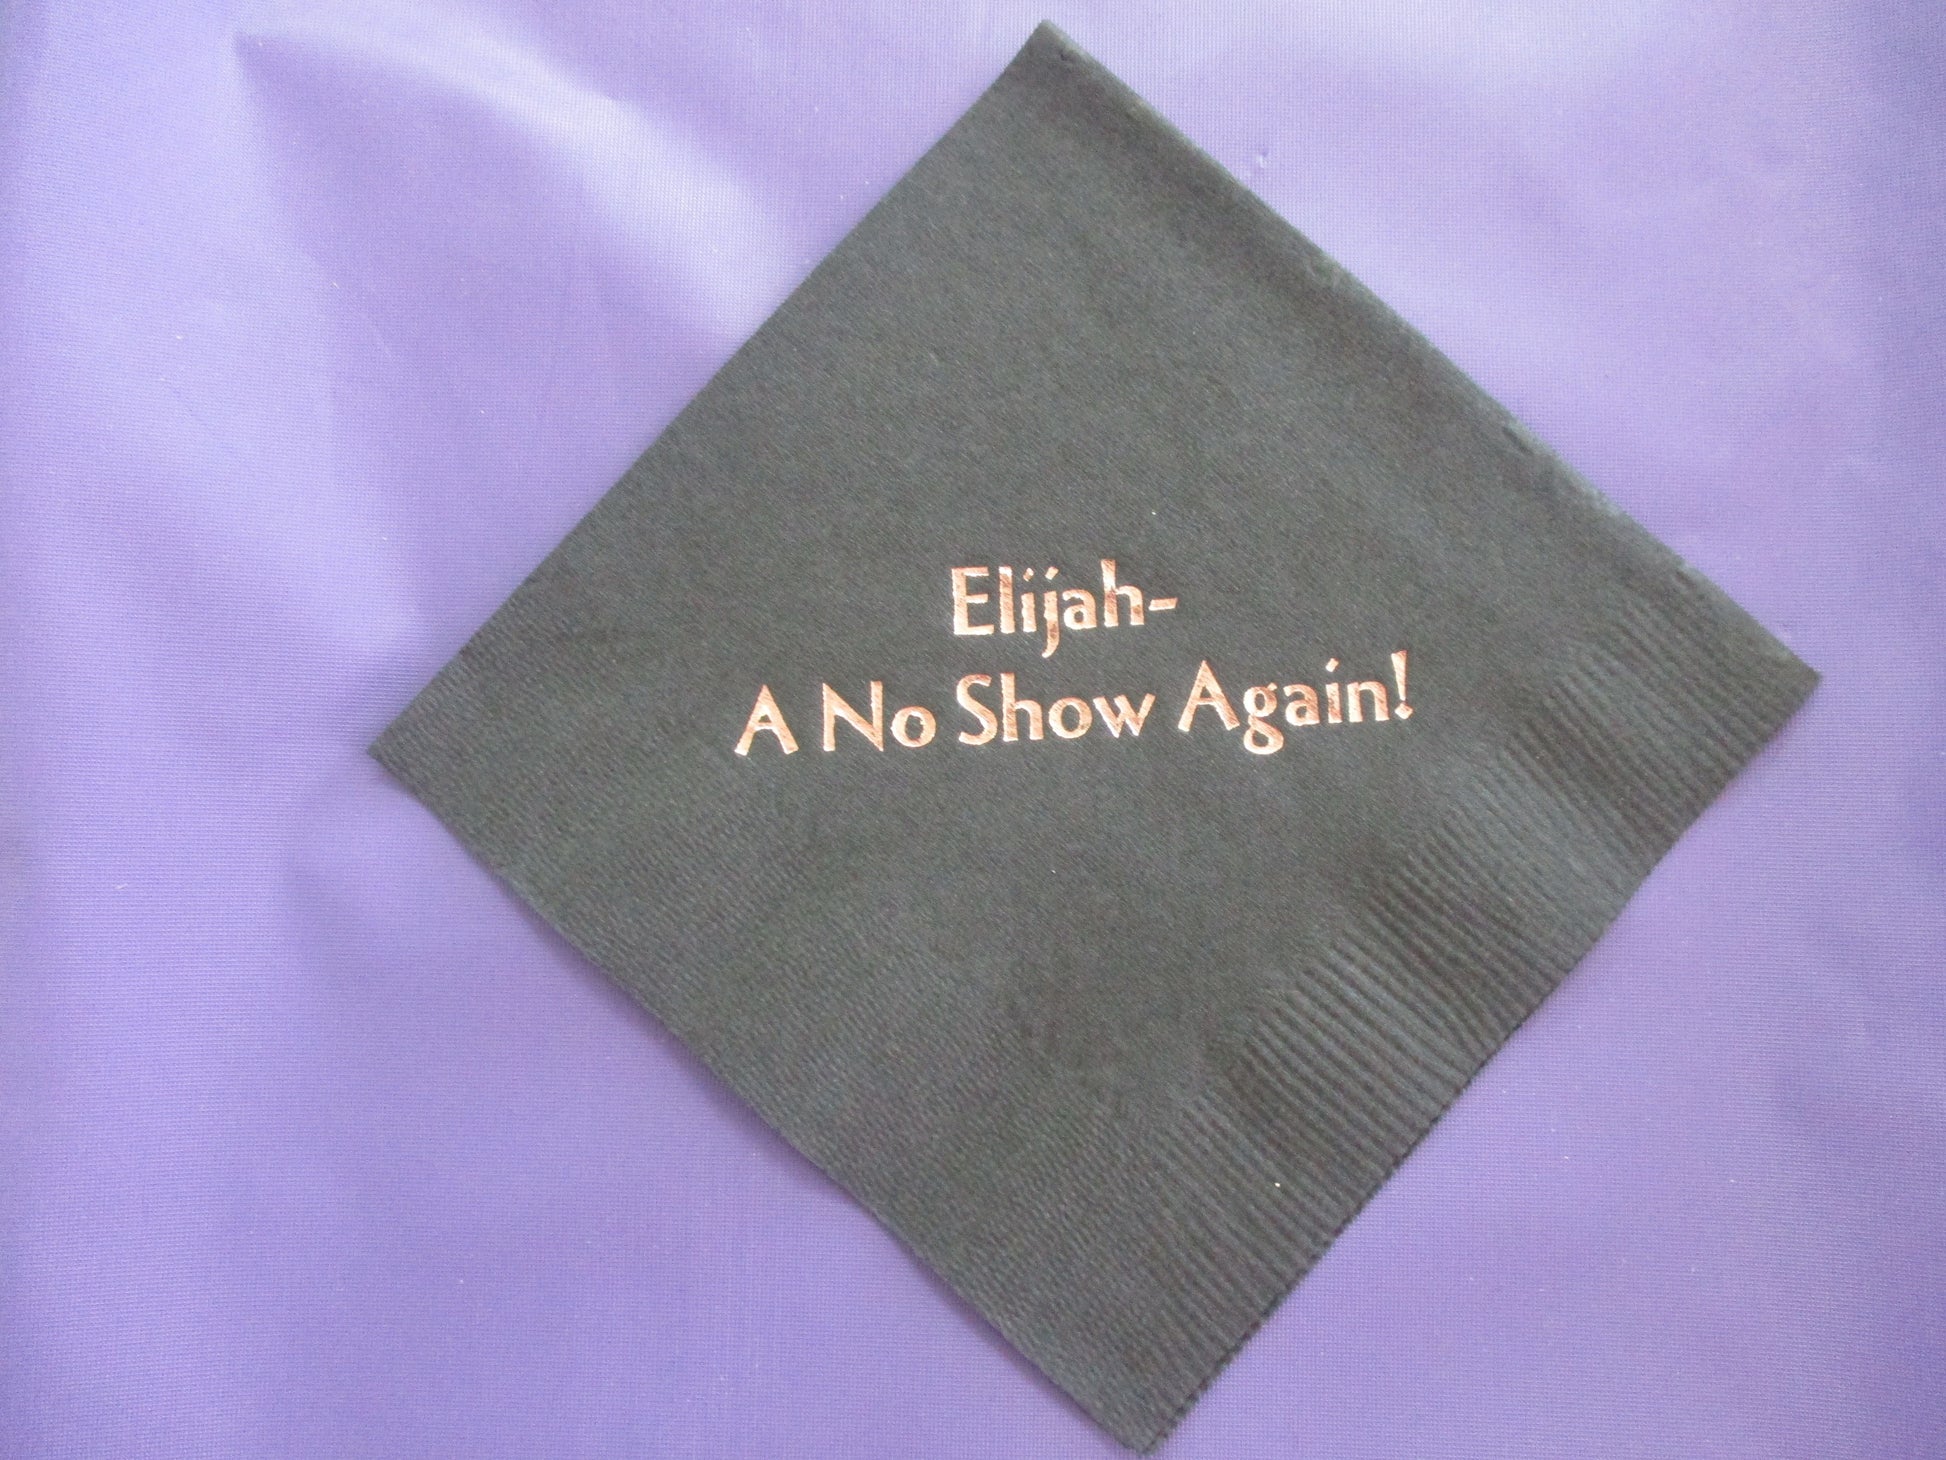 Black cocktail napkin with Elijah - A No Show Again! slogan